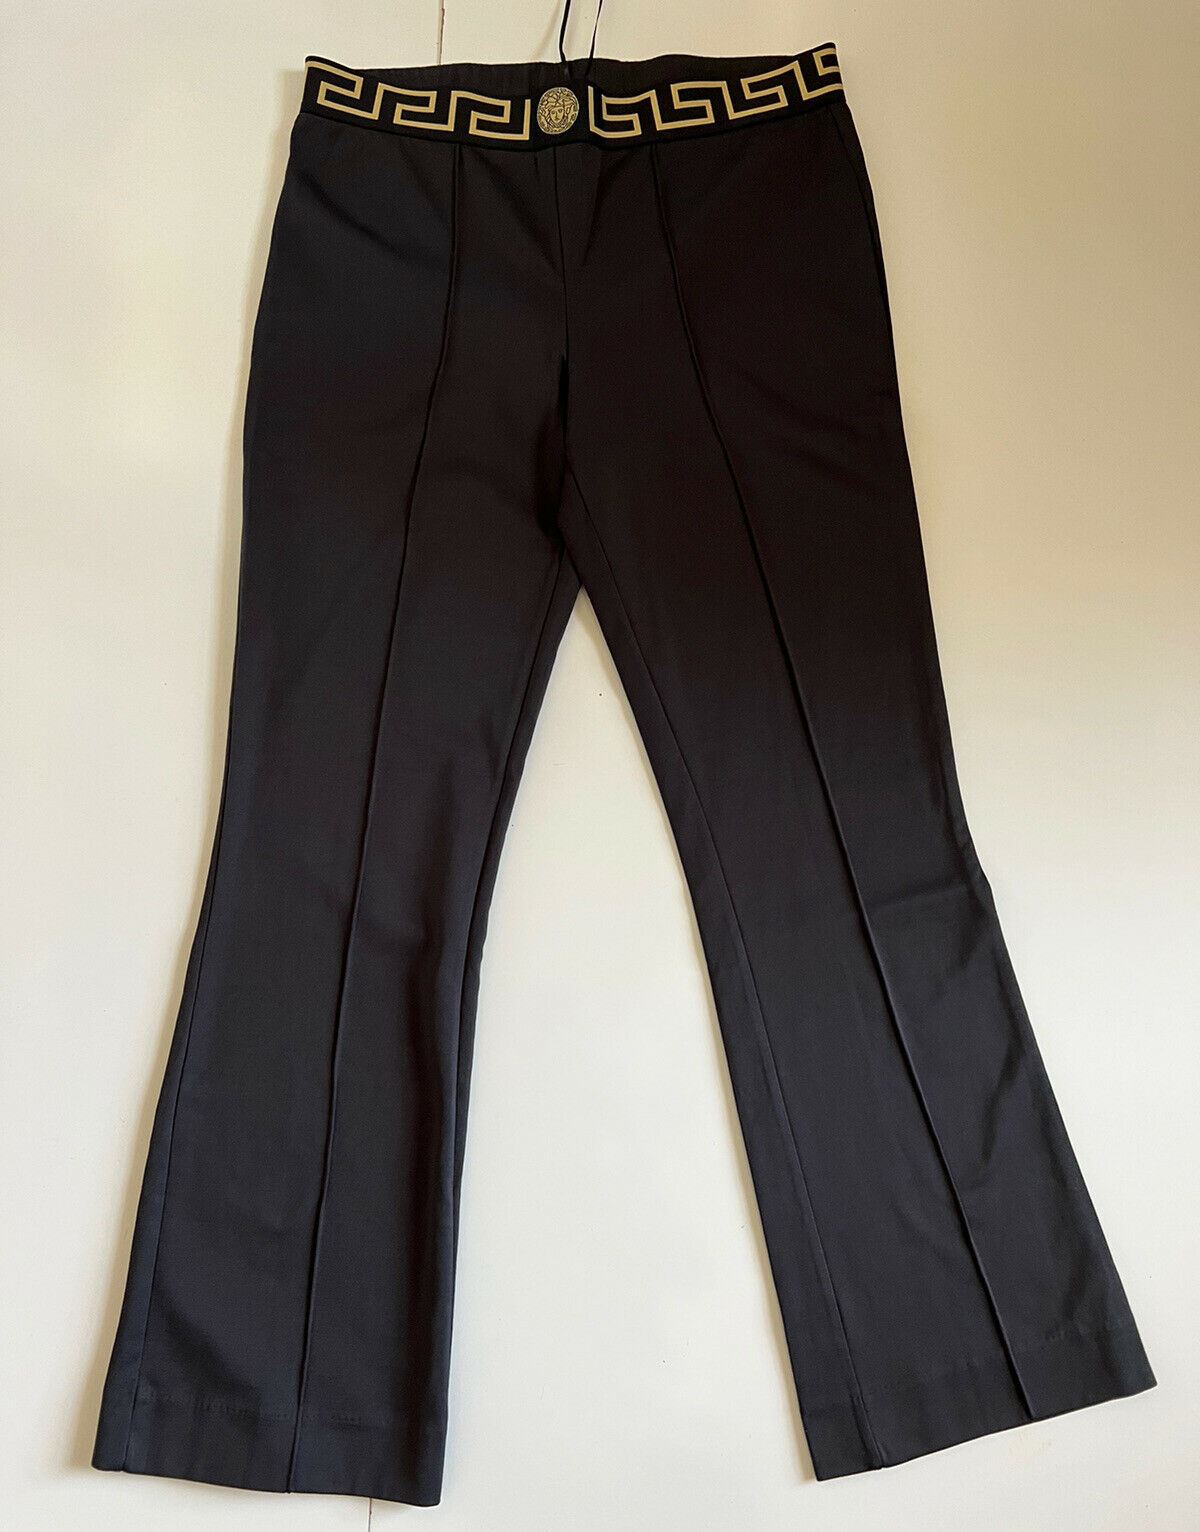 NWT $350 Versace Women's Black Medusa Greca border Track Pants 5 Made in Italy